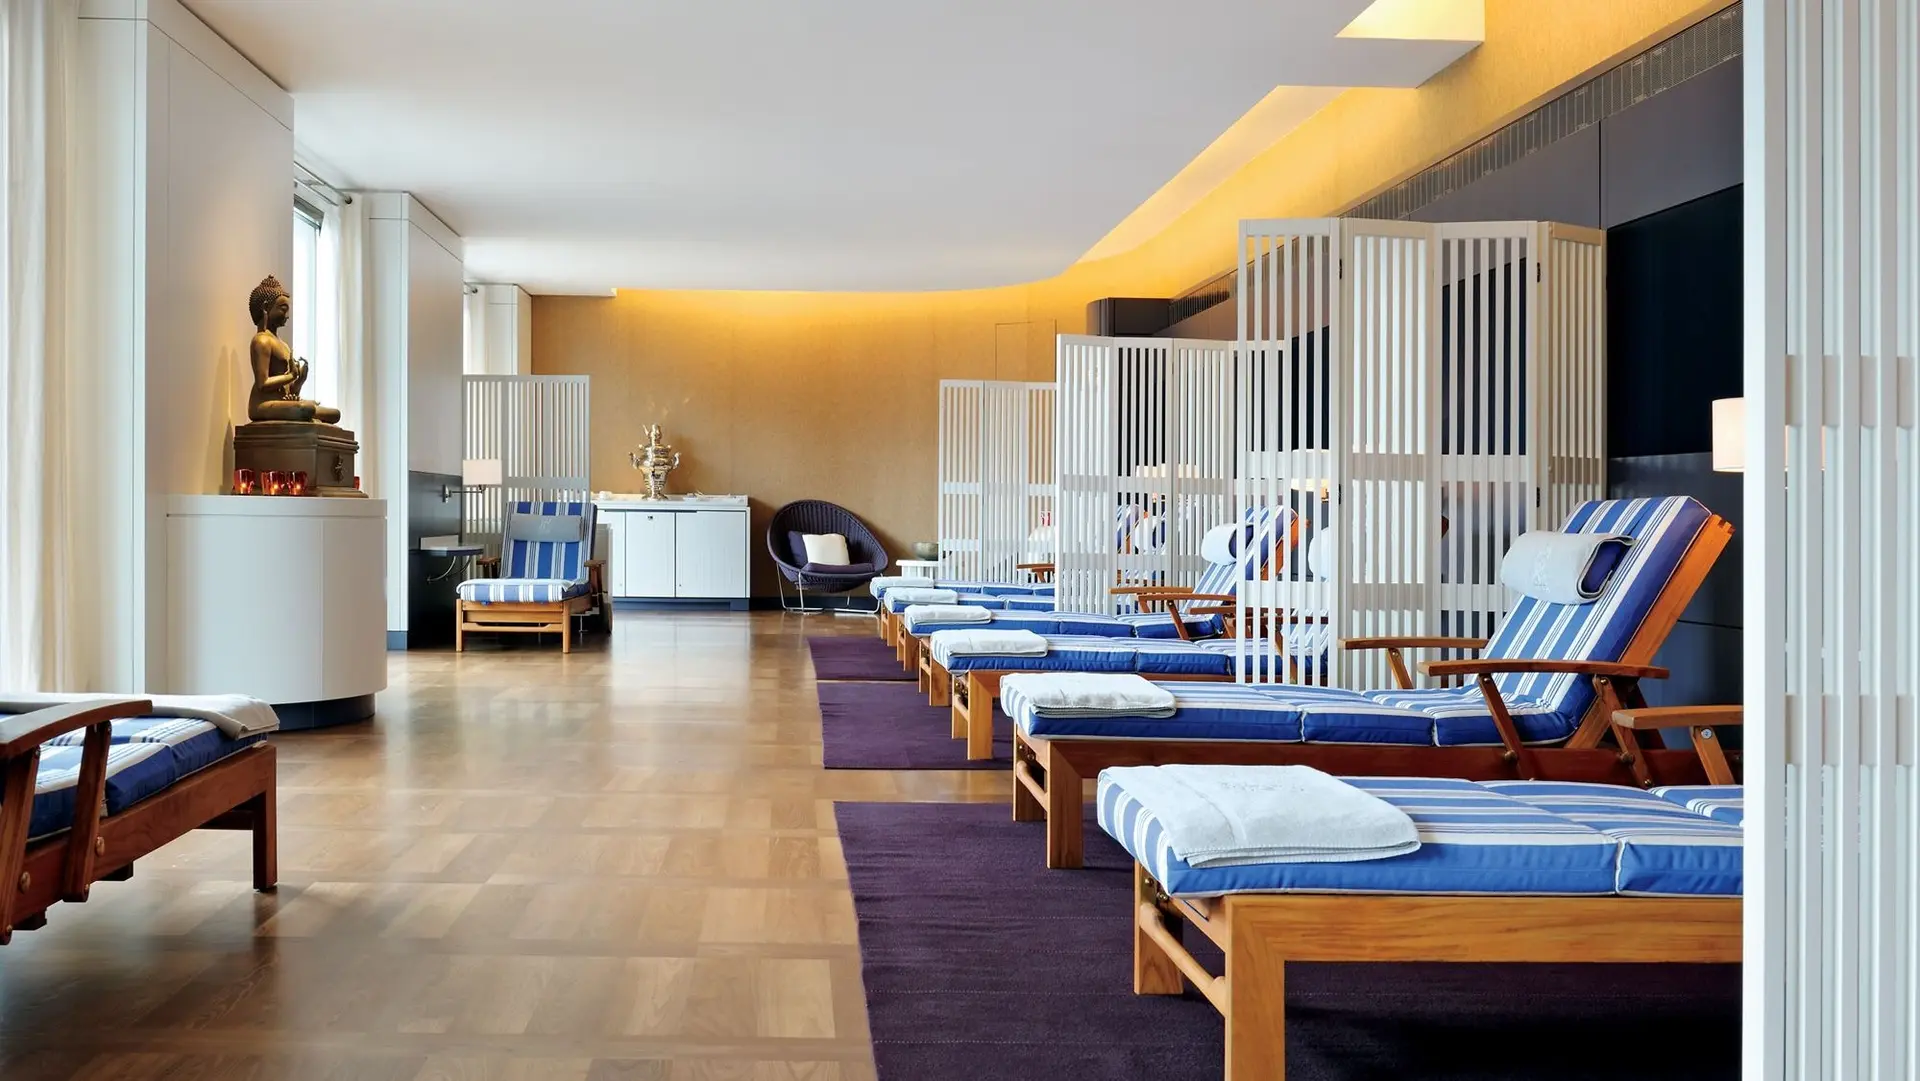 Hotel review Service & Facilities' - The Ritz-Carlton, Wolfsburg - 2